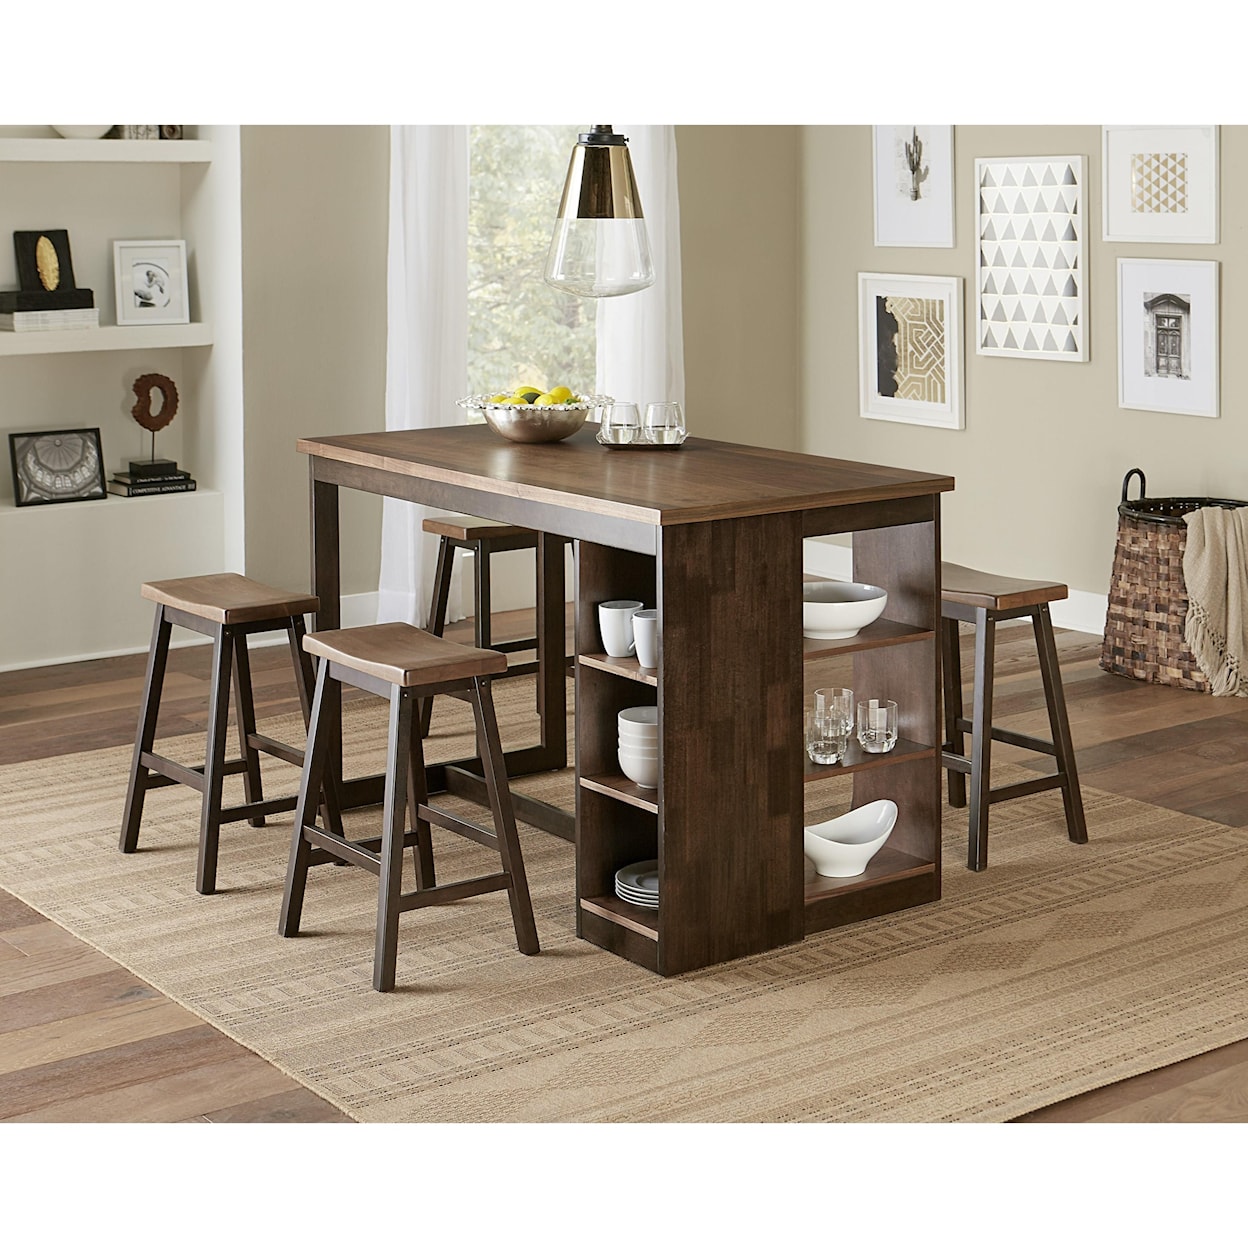 Progressive Furniture Kenny Counter Storage Table